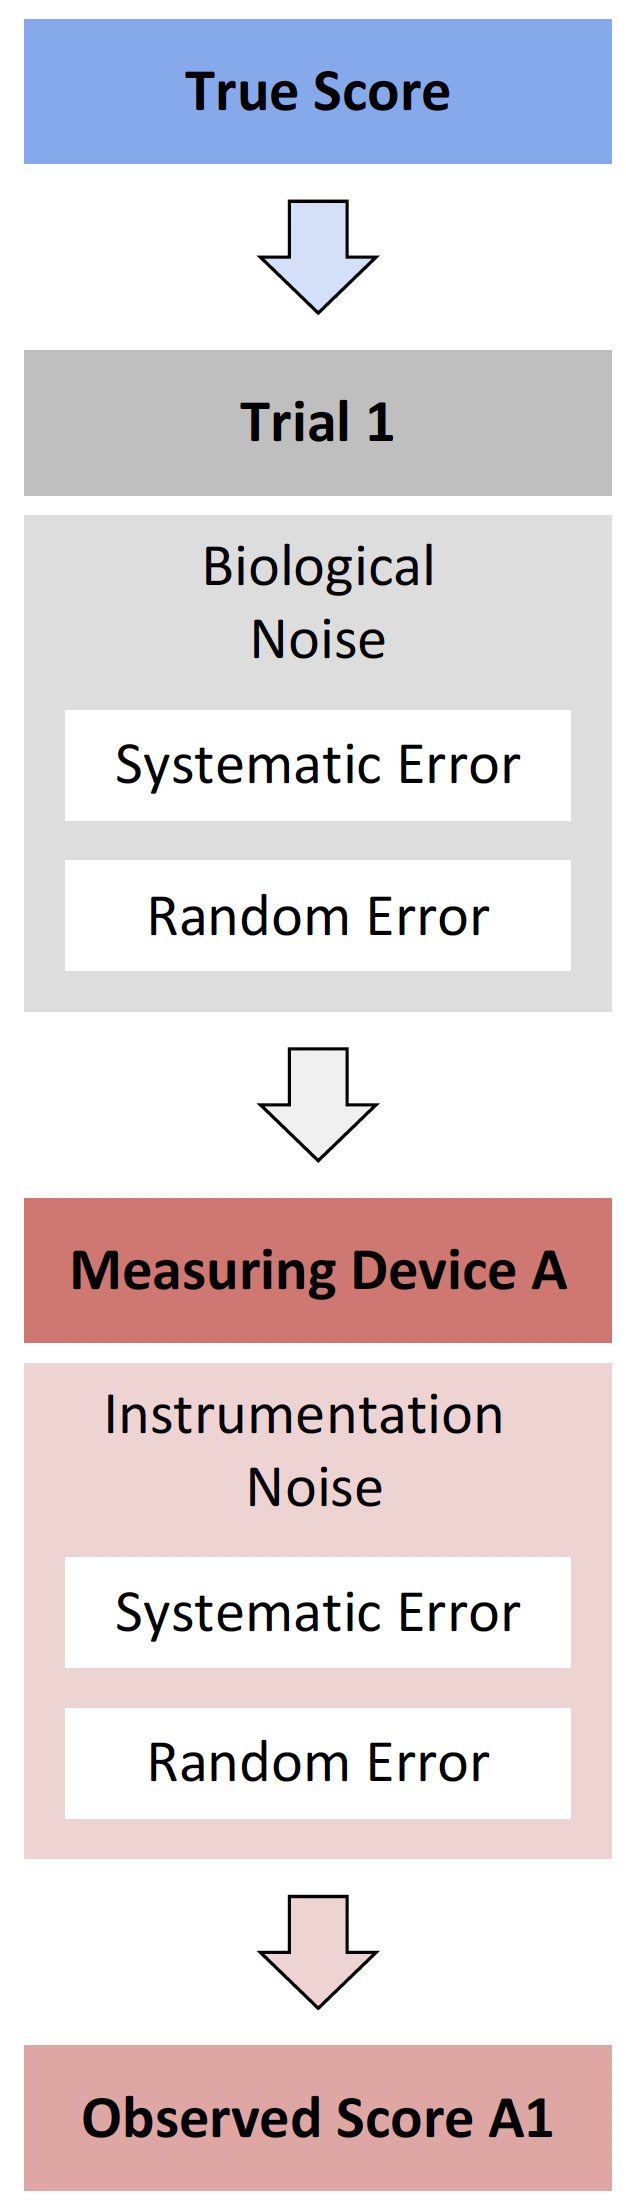 Measurement error components